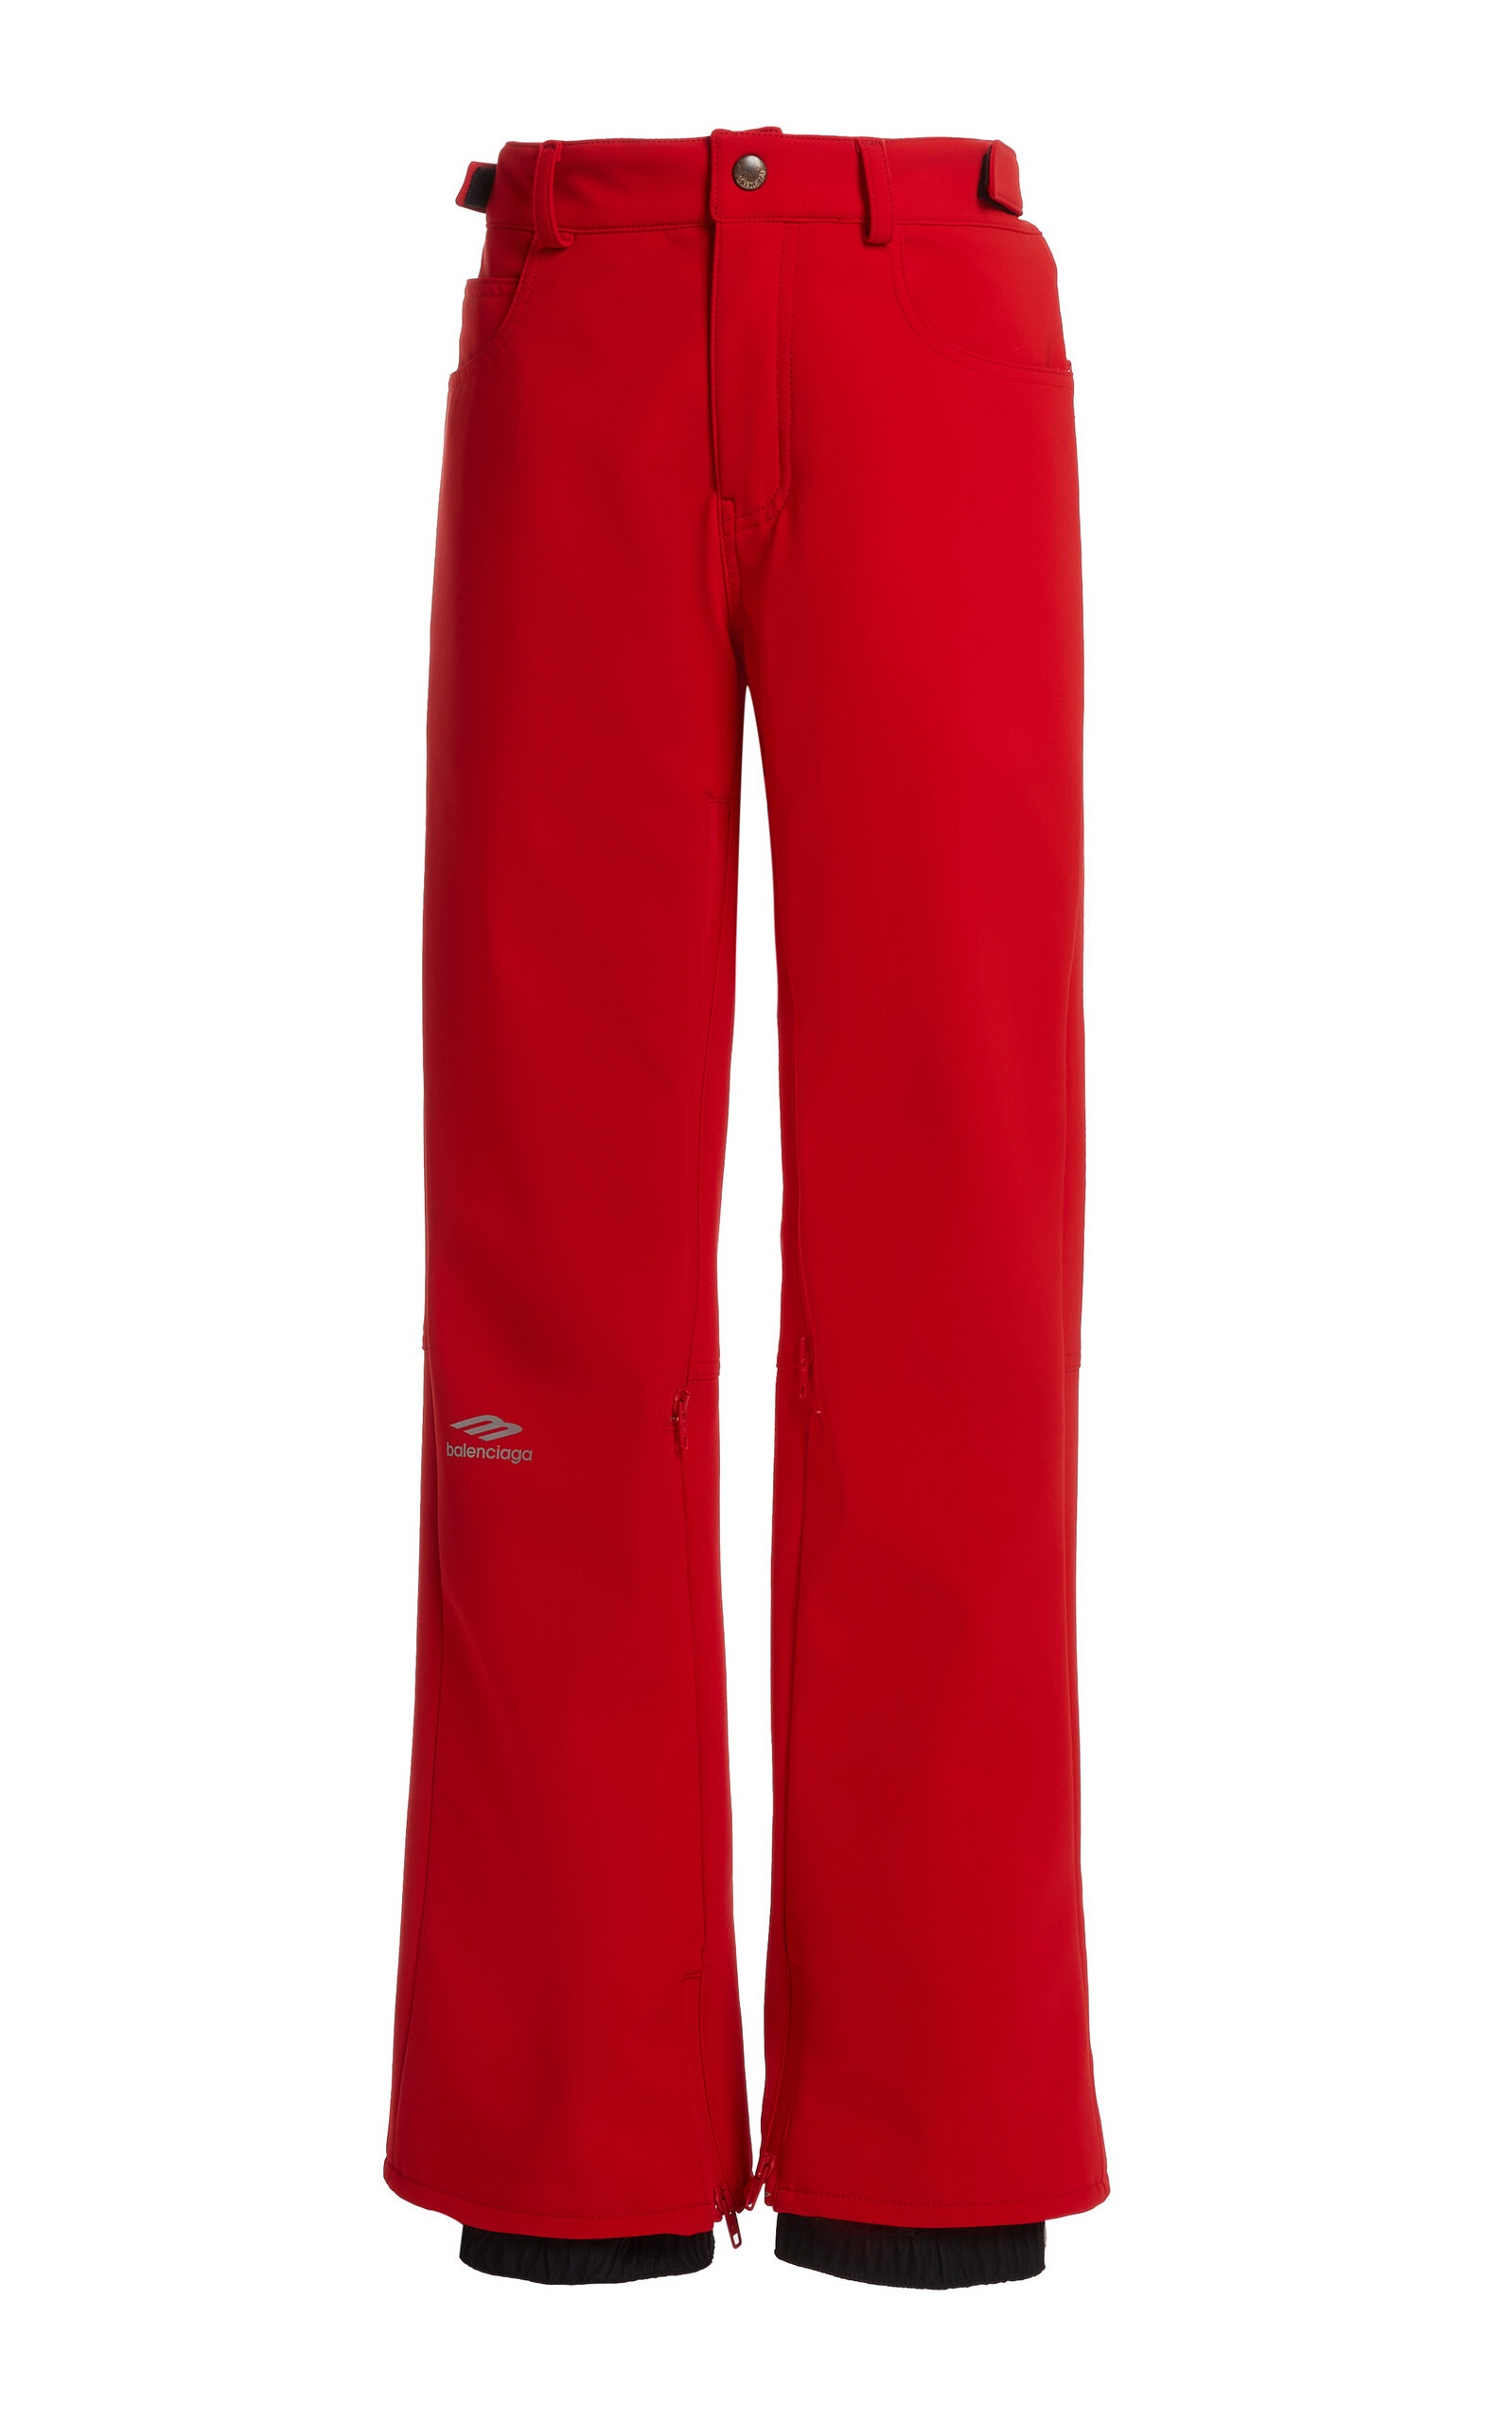 5-Pocket Nylon Ski Pants red - 1